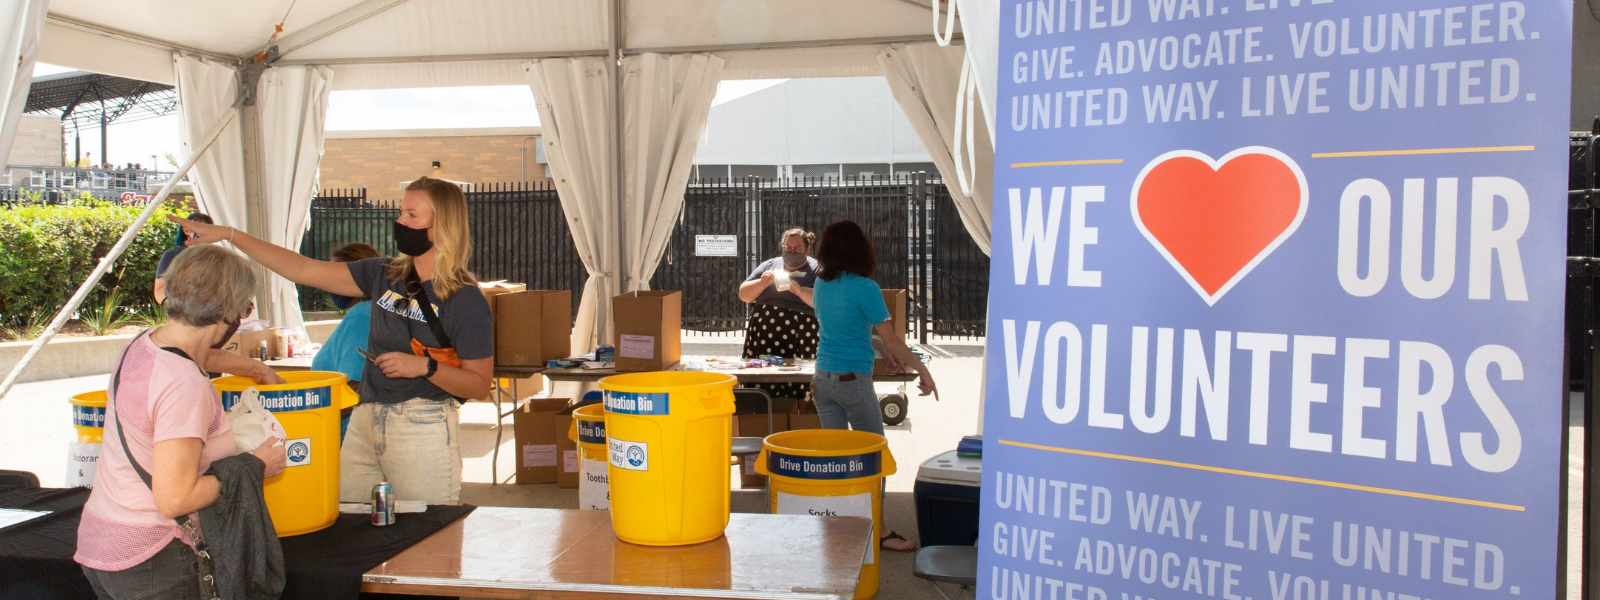 Volunteers outside loading donation bins.